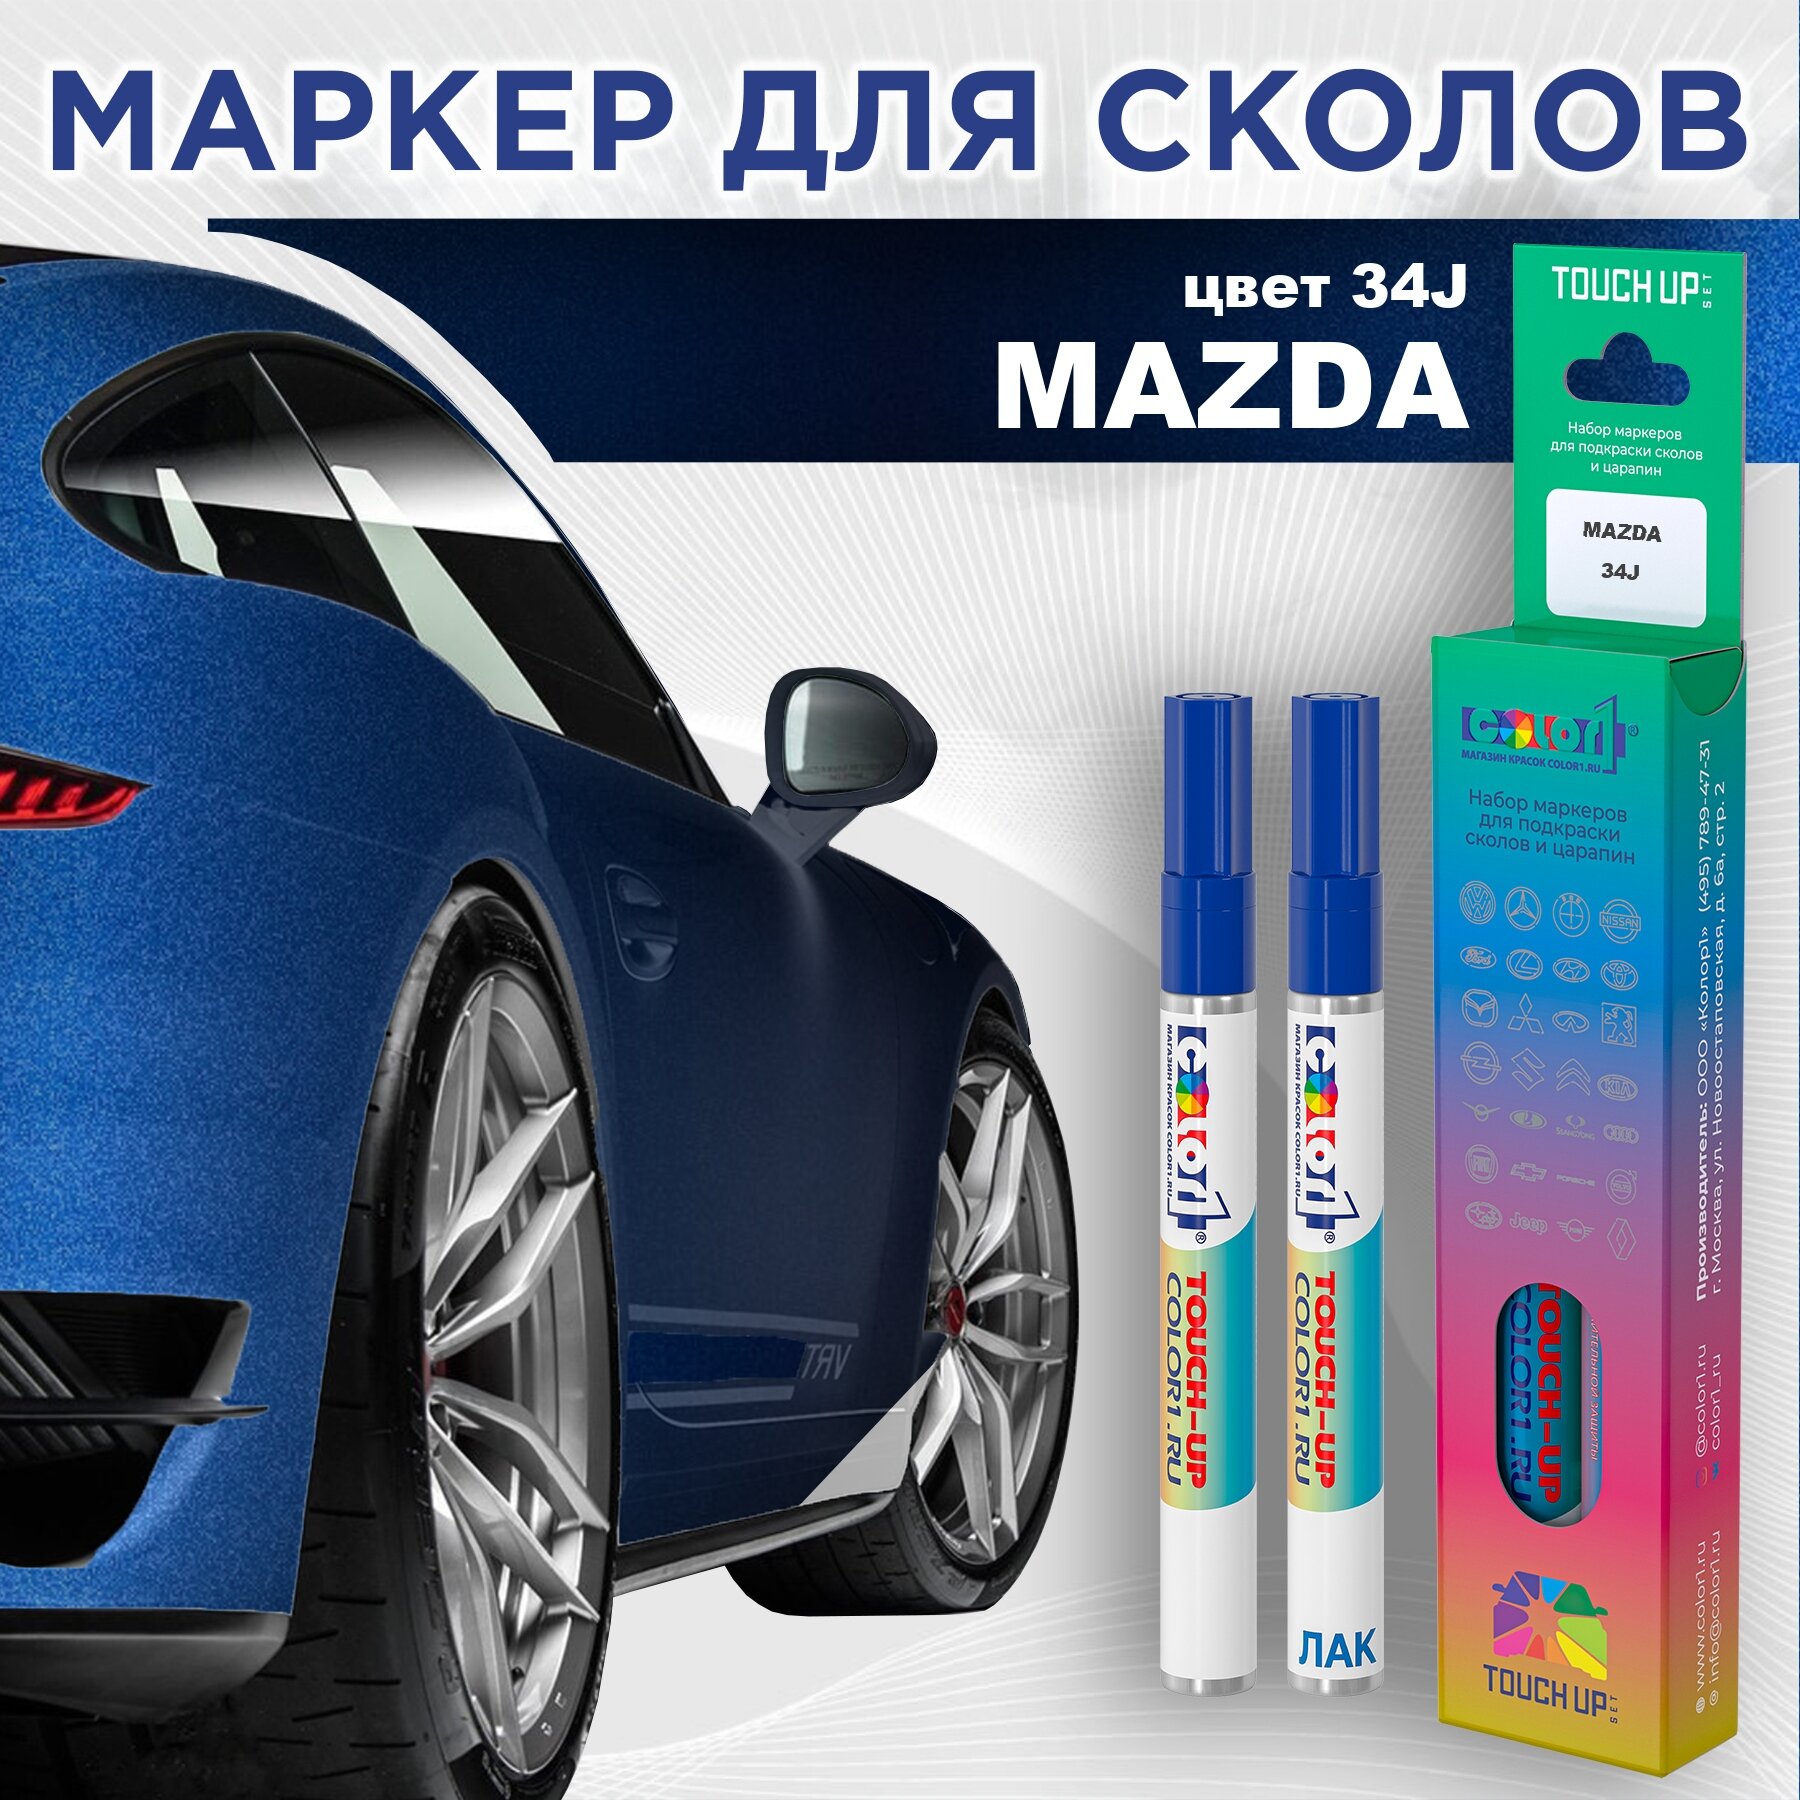 Набор маркеров (маркер с краской и маркер с лаком) для закраски сколов и царапин на автомобиле MAZDA, цвет 34J - AURORA BLUE, ELECTRIC BLUE